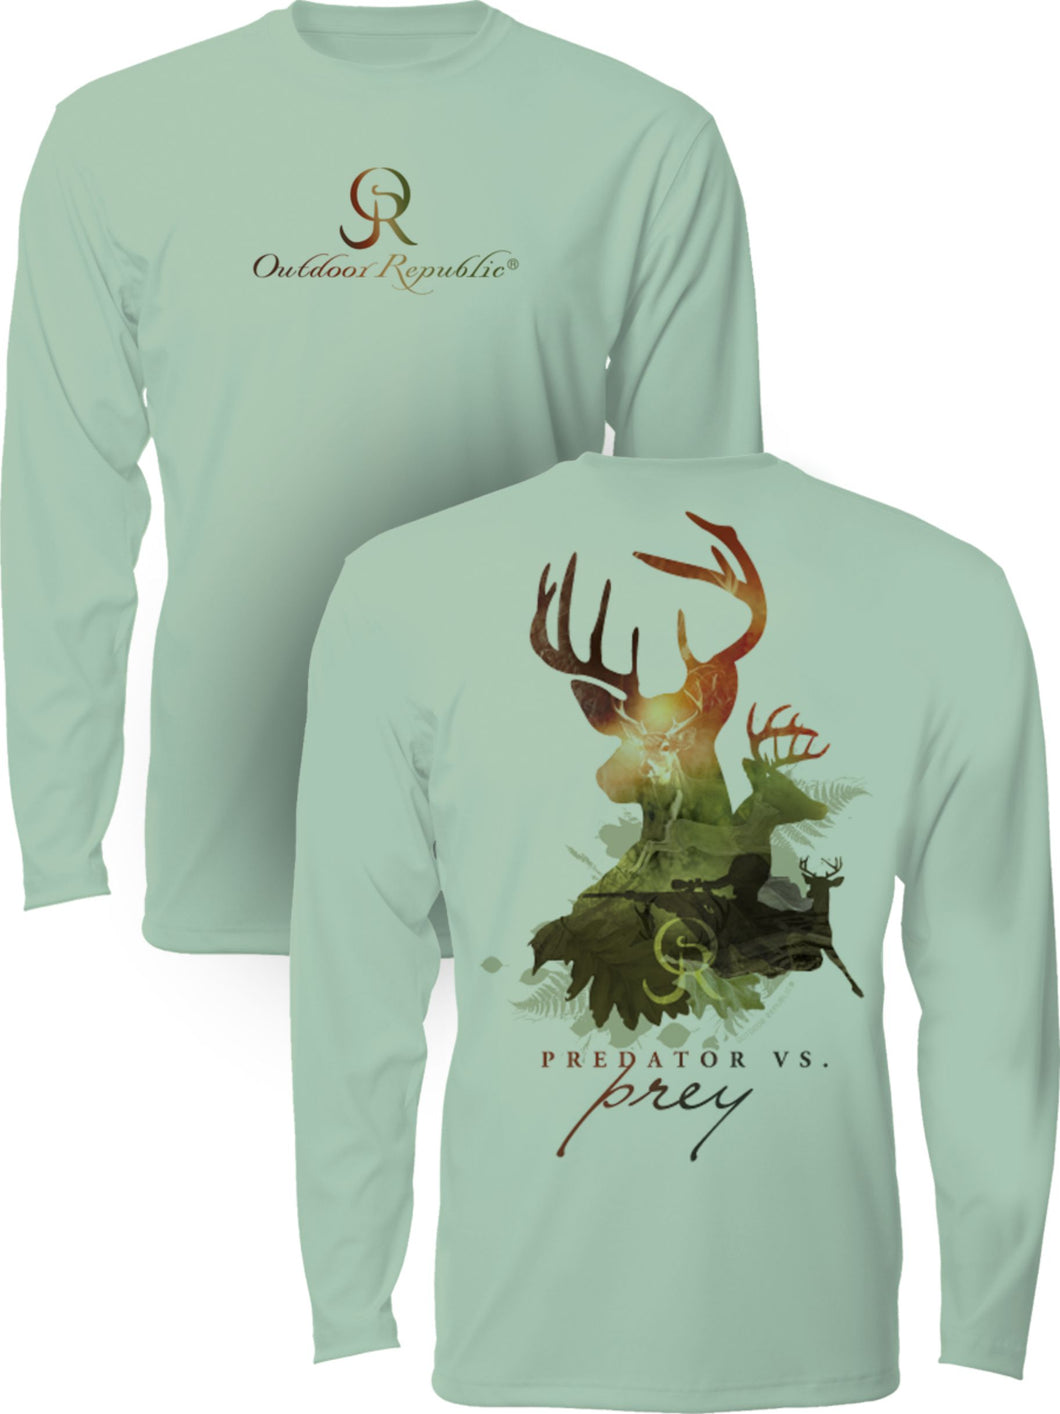 Woods Deer Youth Performance Shirt